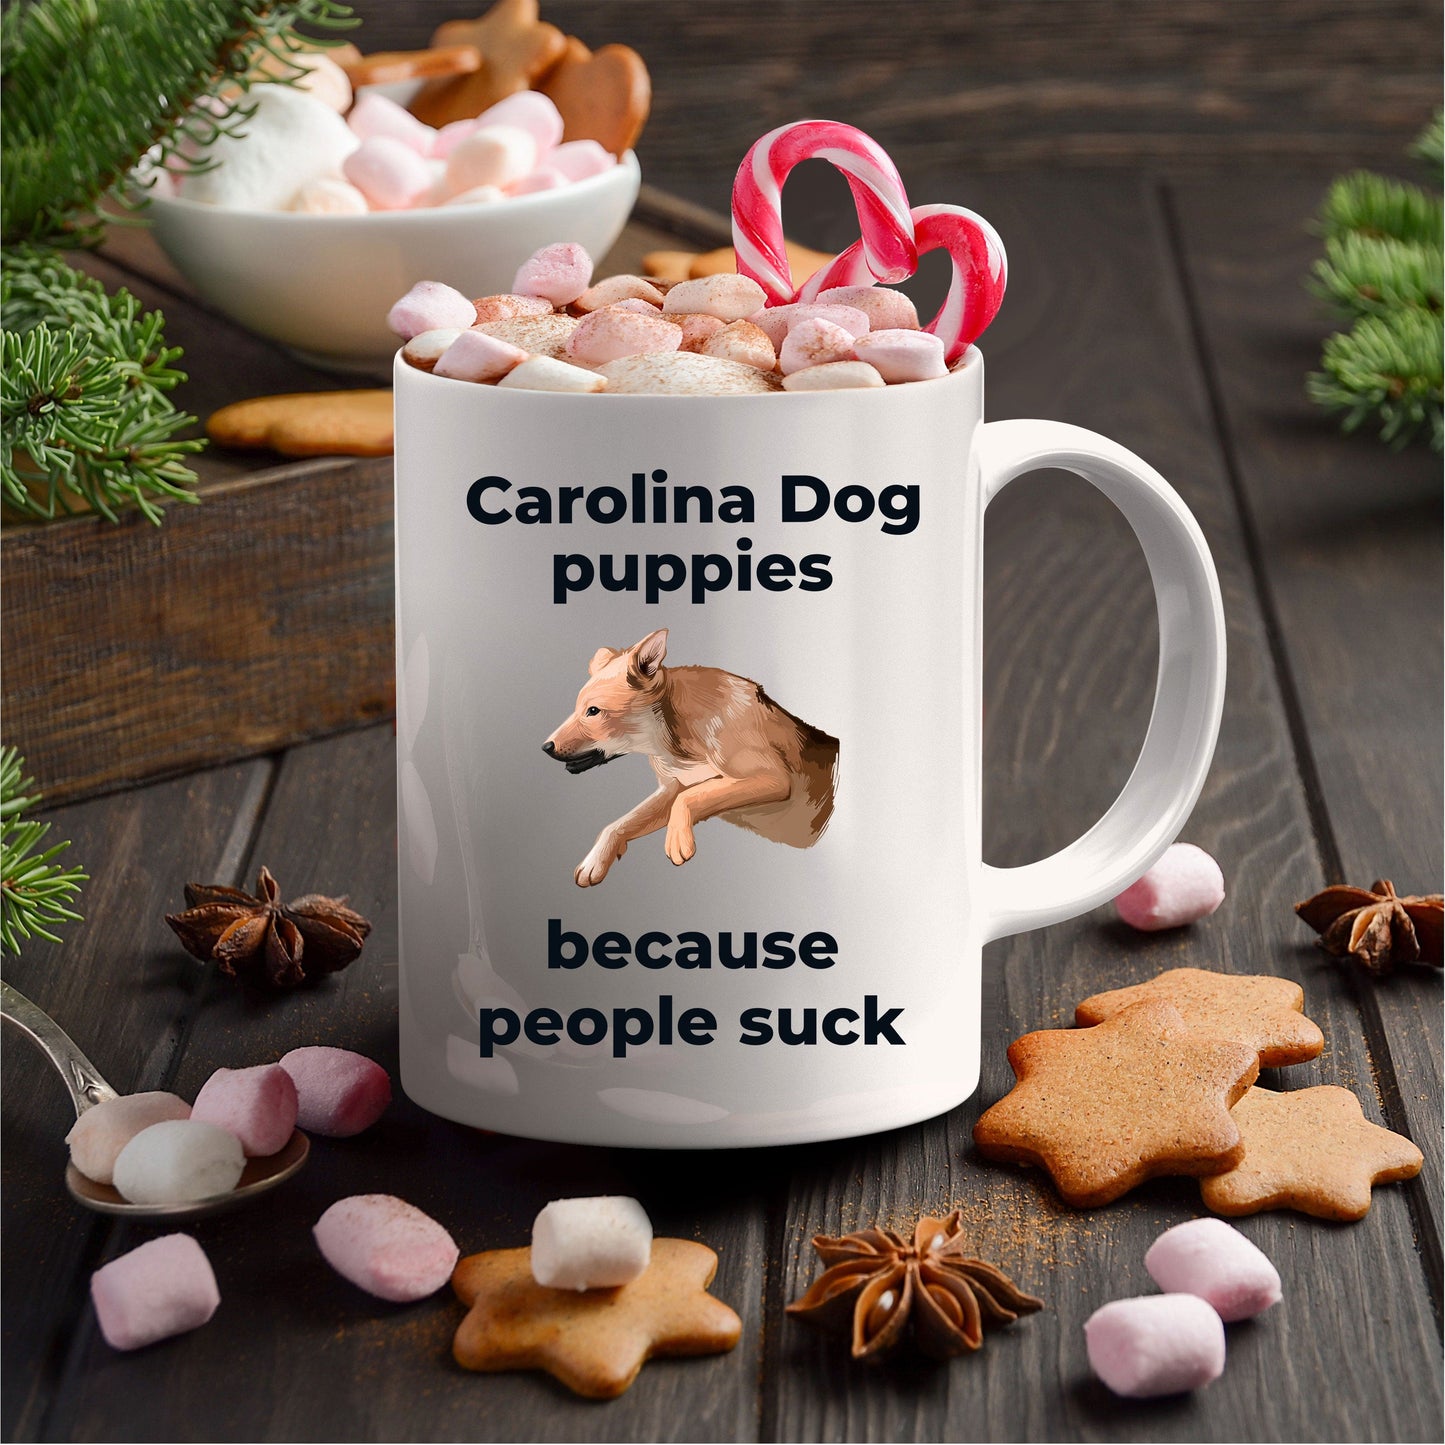 Carolina Dog Coffee Mug - Carolina Puppies because people sick